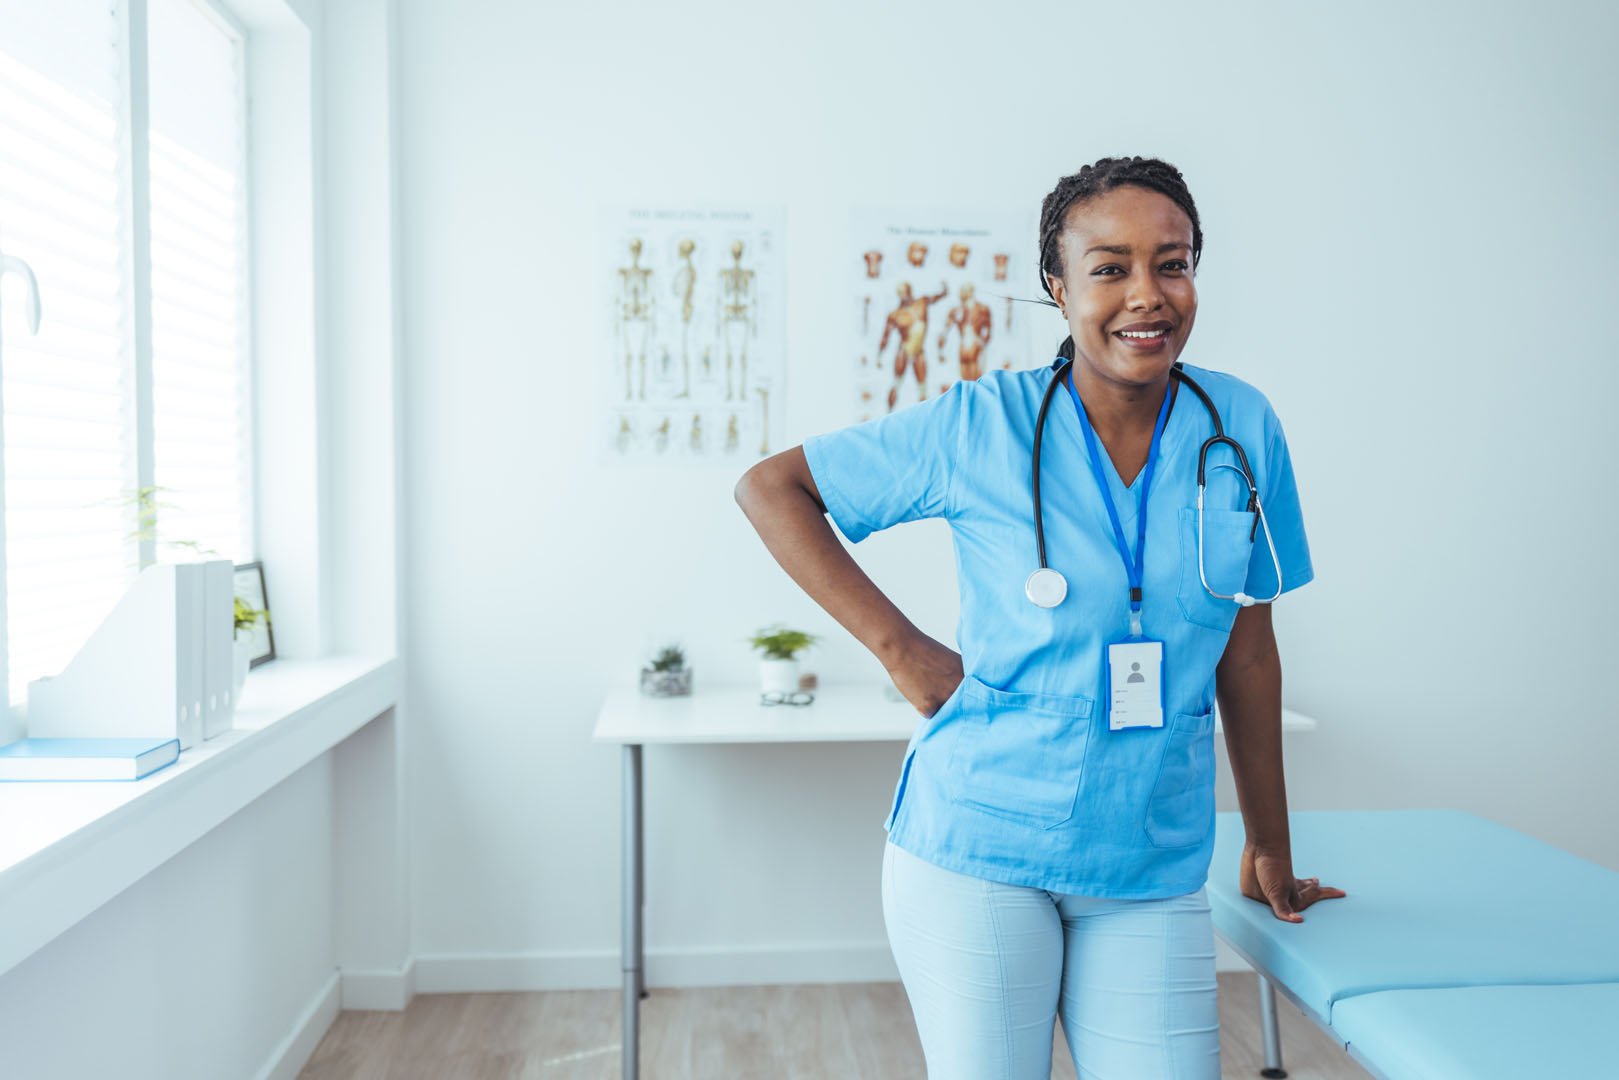 Nurse smiling while working